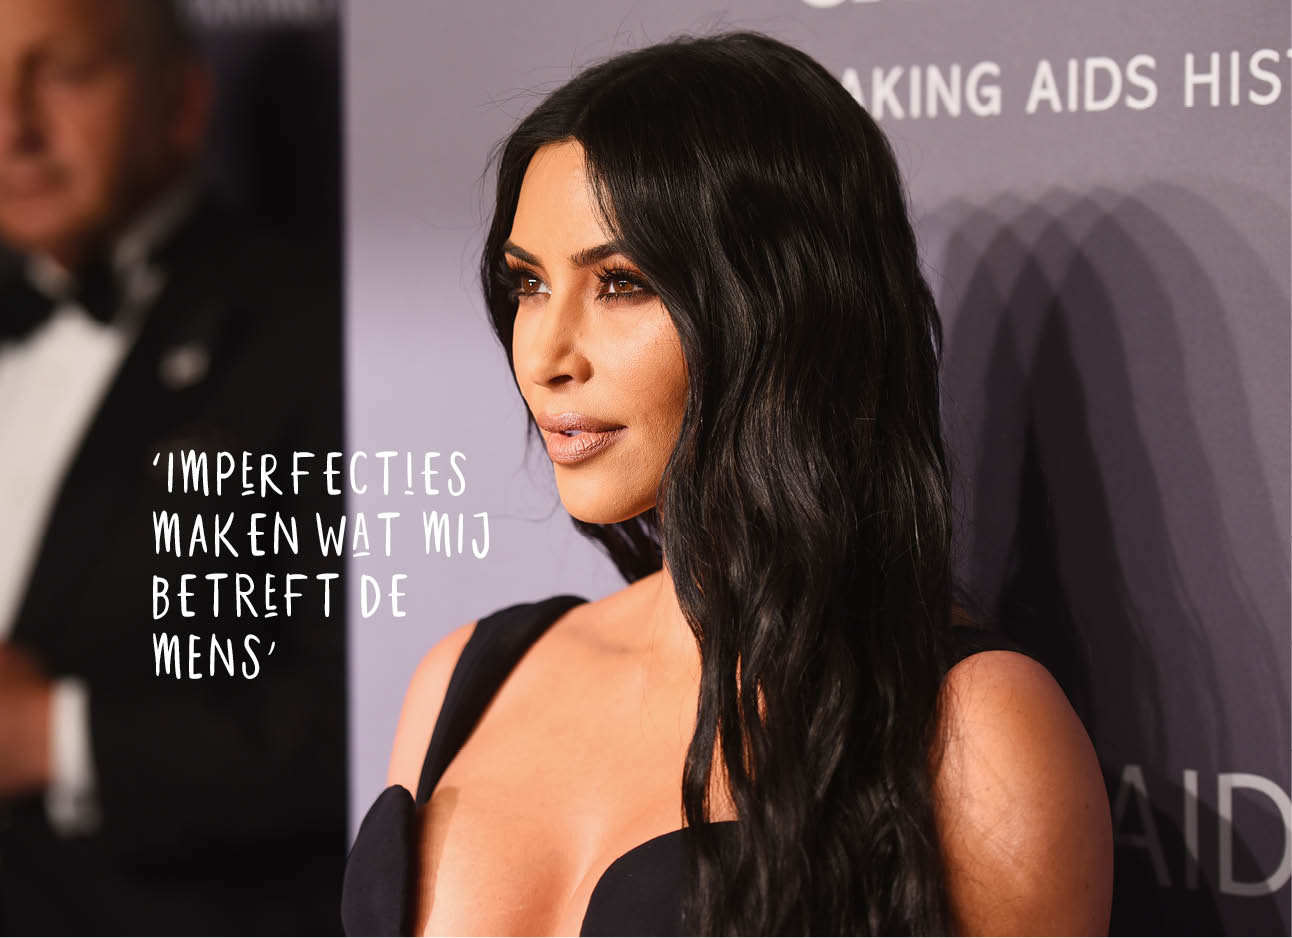 Even over Kim Kardashian en psoriasis